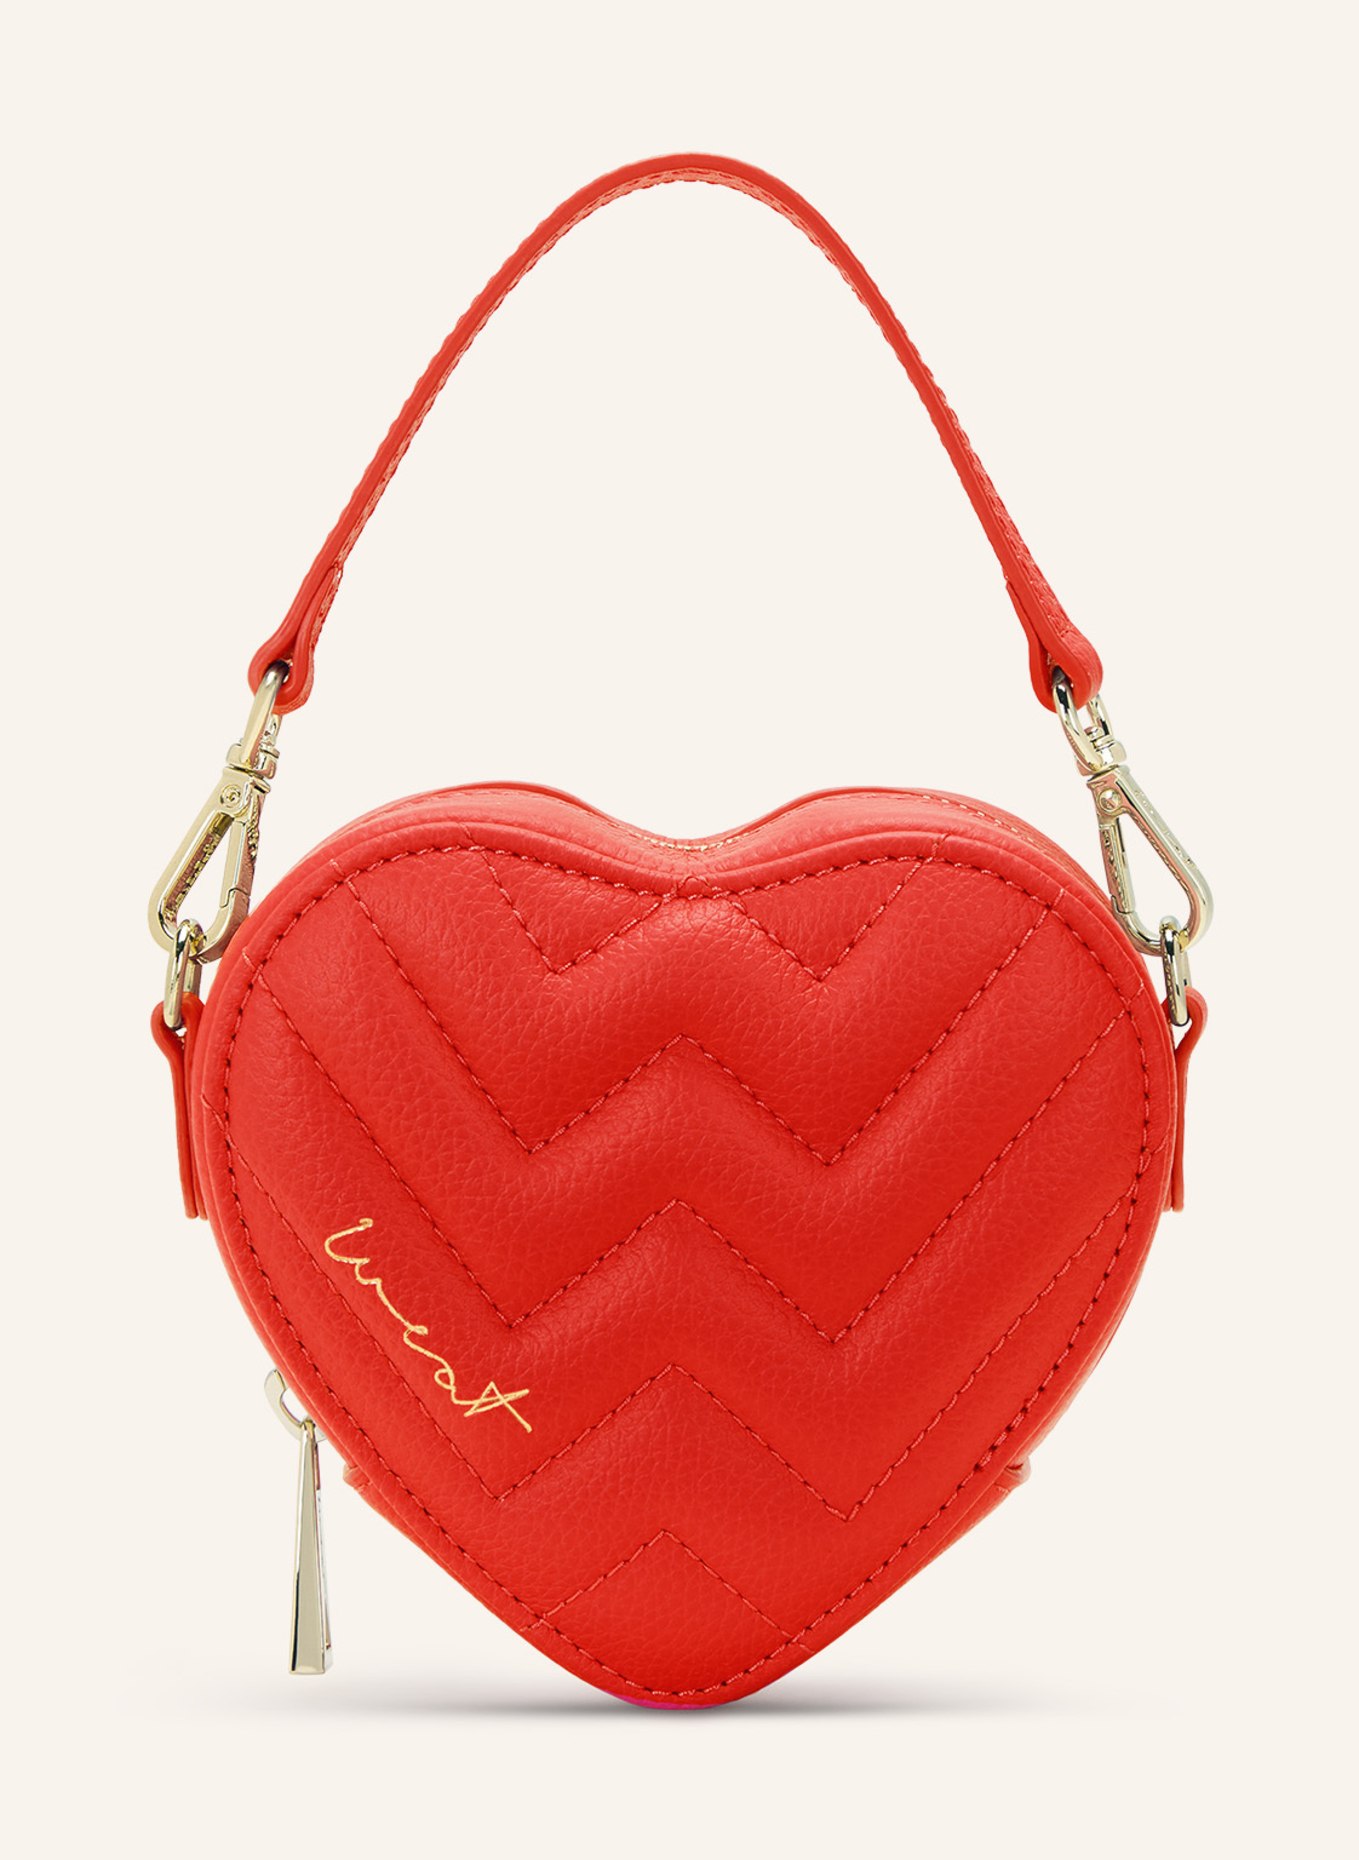 WEAT Handtasche MINI HEART, Farbe: ROT (Bild 1)